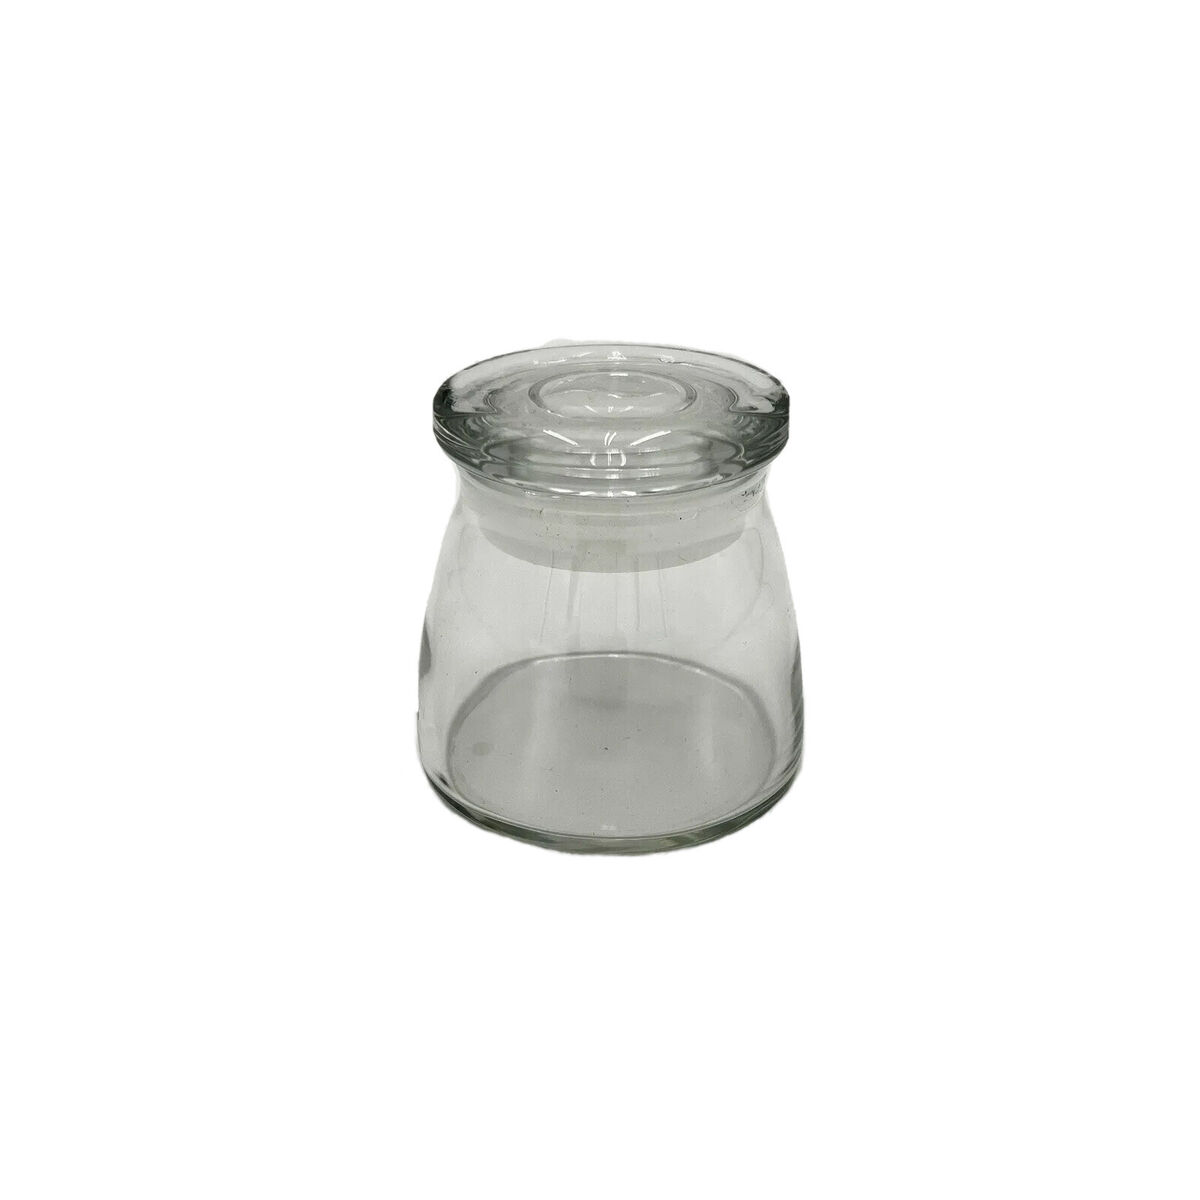 4.5 oz Mini Glass Jars with Airtight Glass Lids (Set of 4)